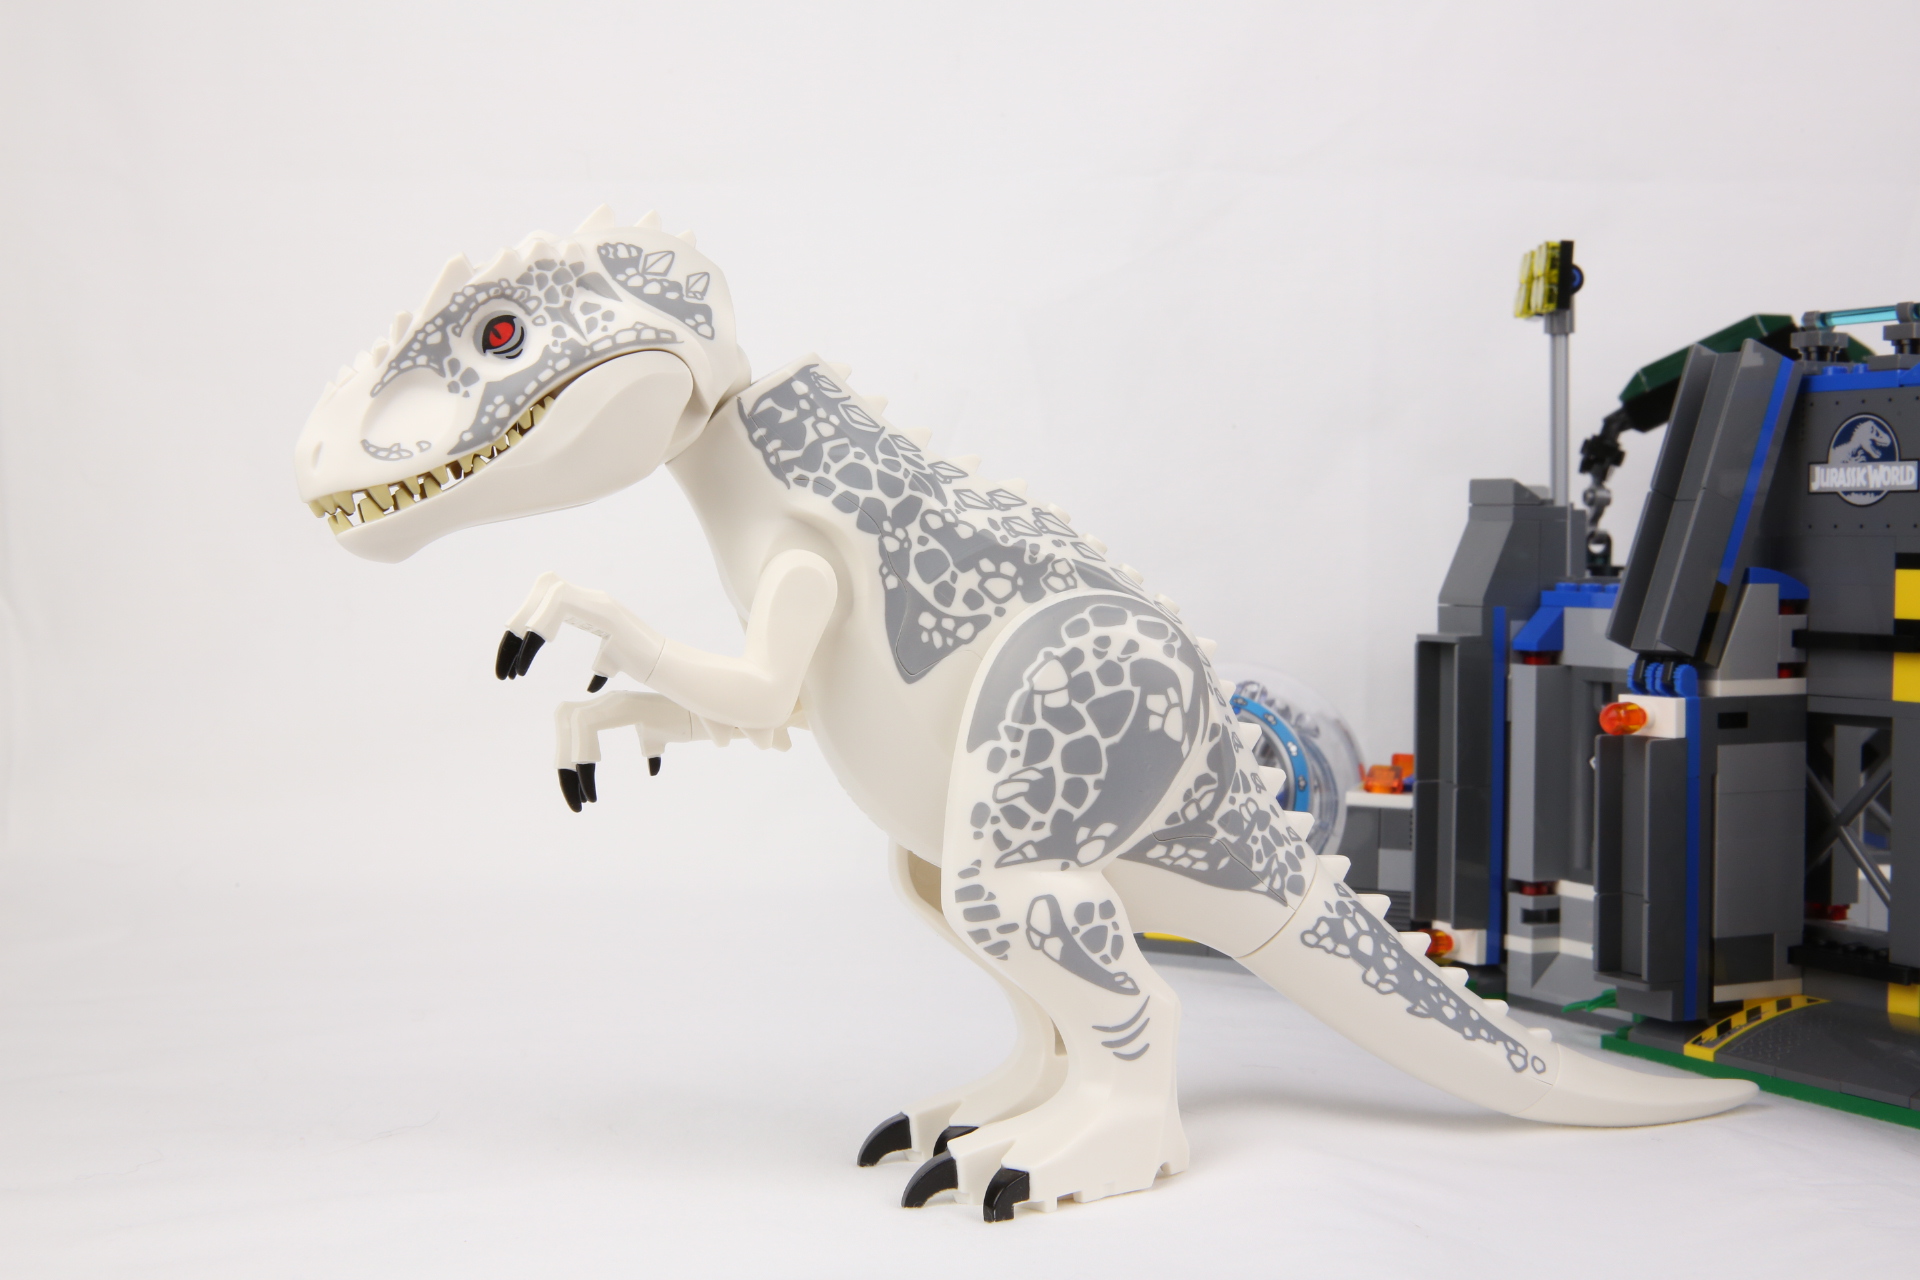 Review: LEGO 75919 Indominus Rex Breakout Jay's Brick Blog | vlr.eng.br